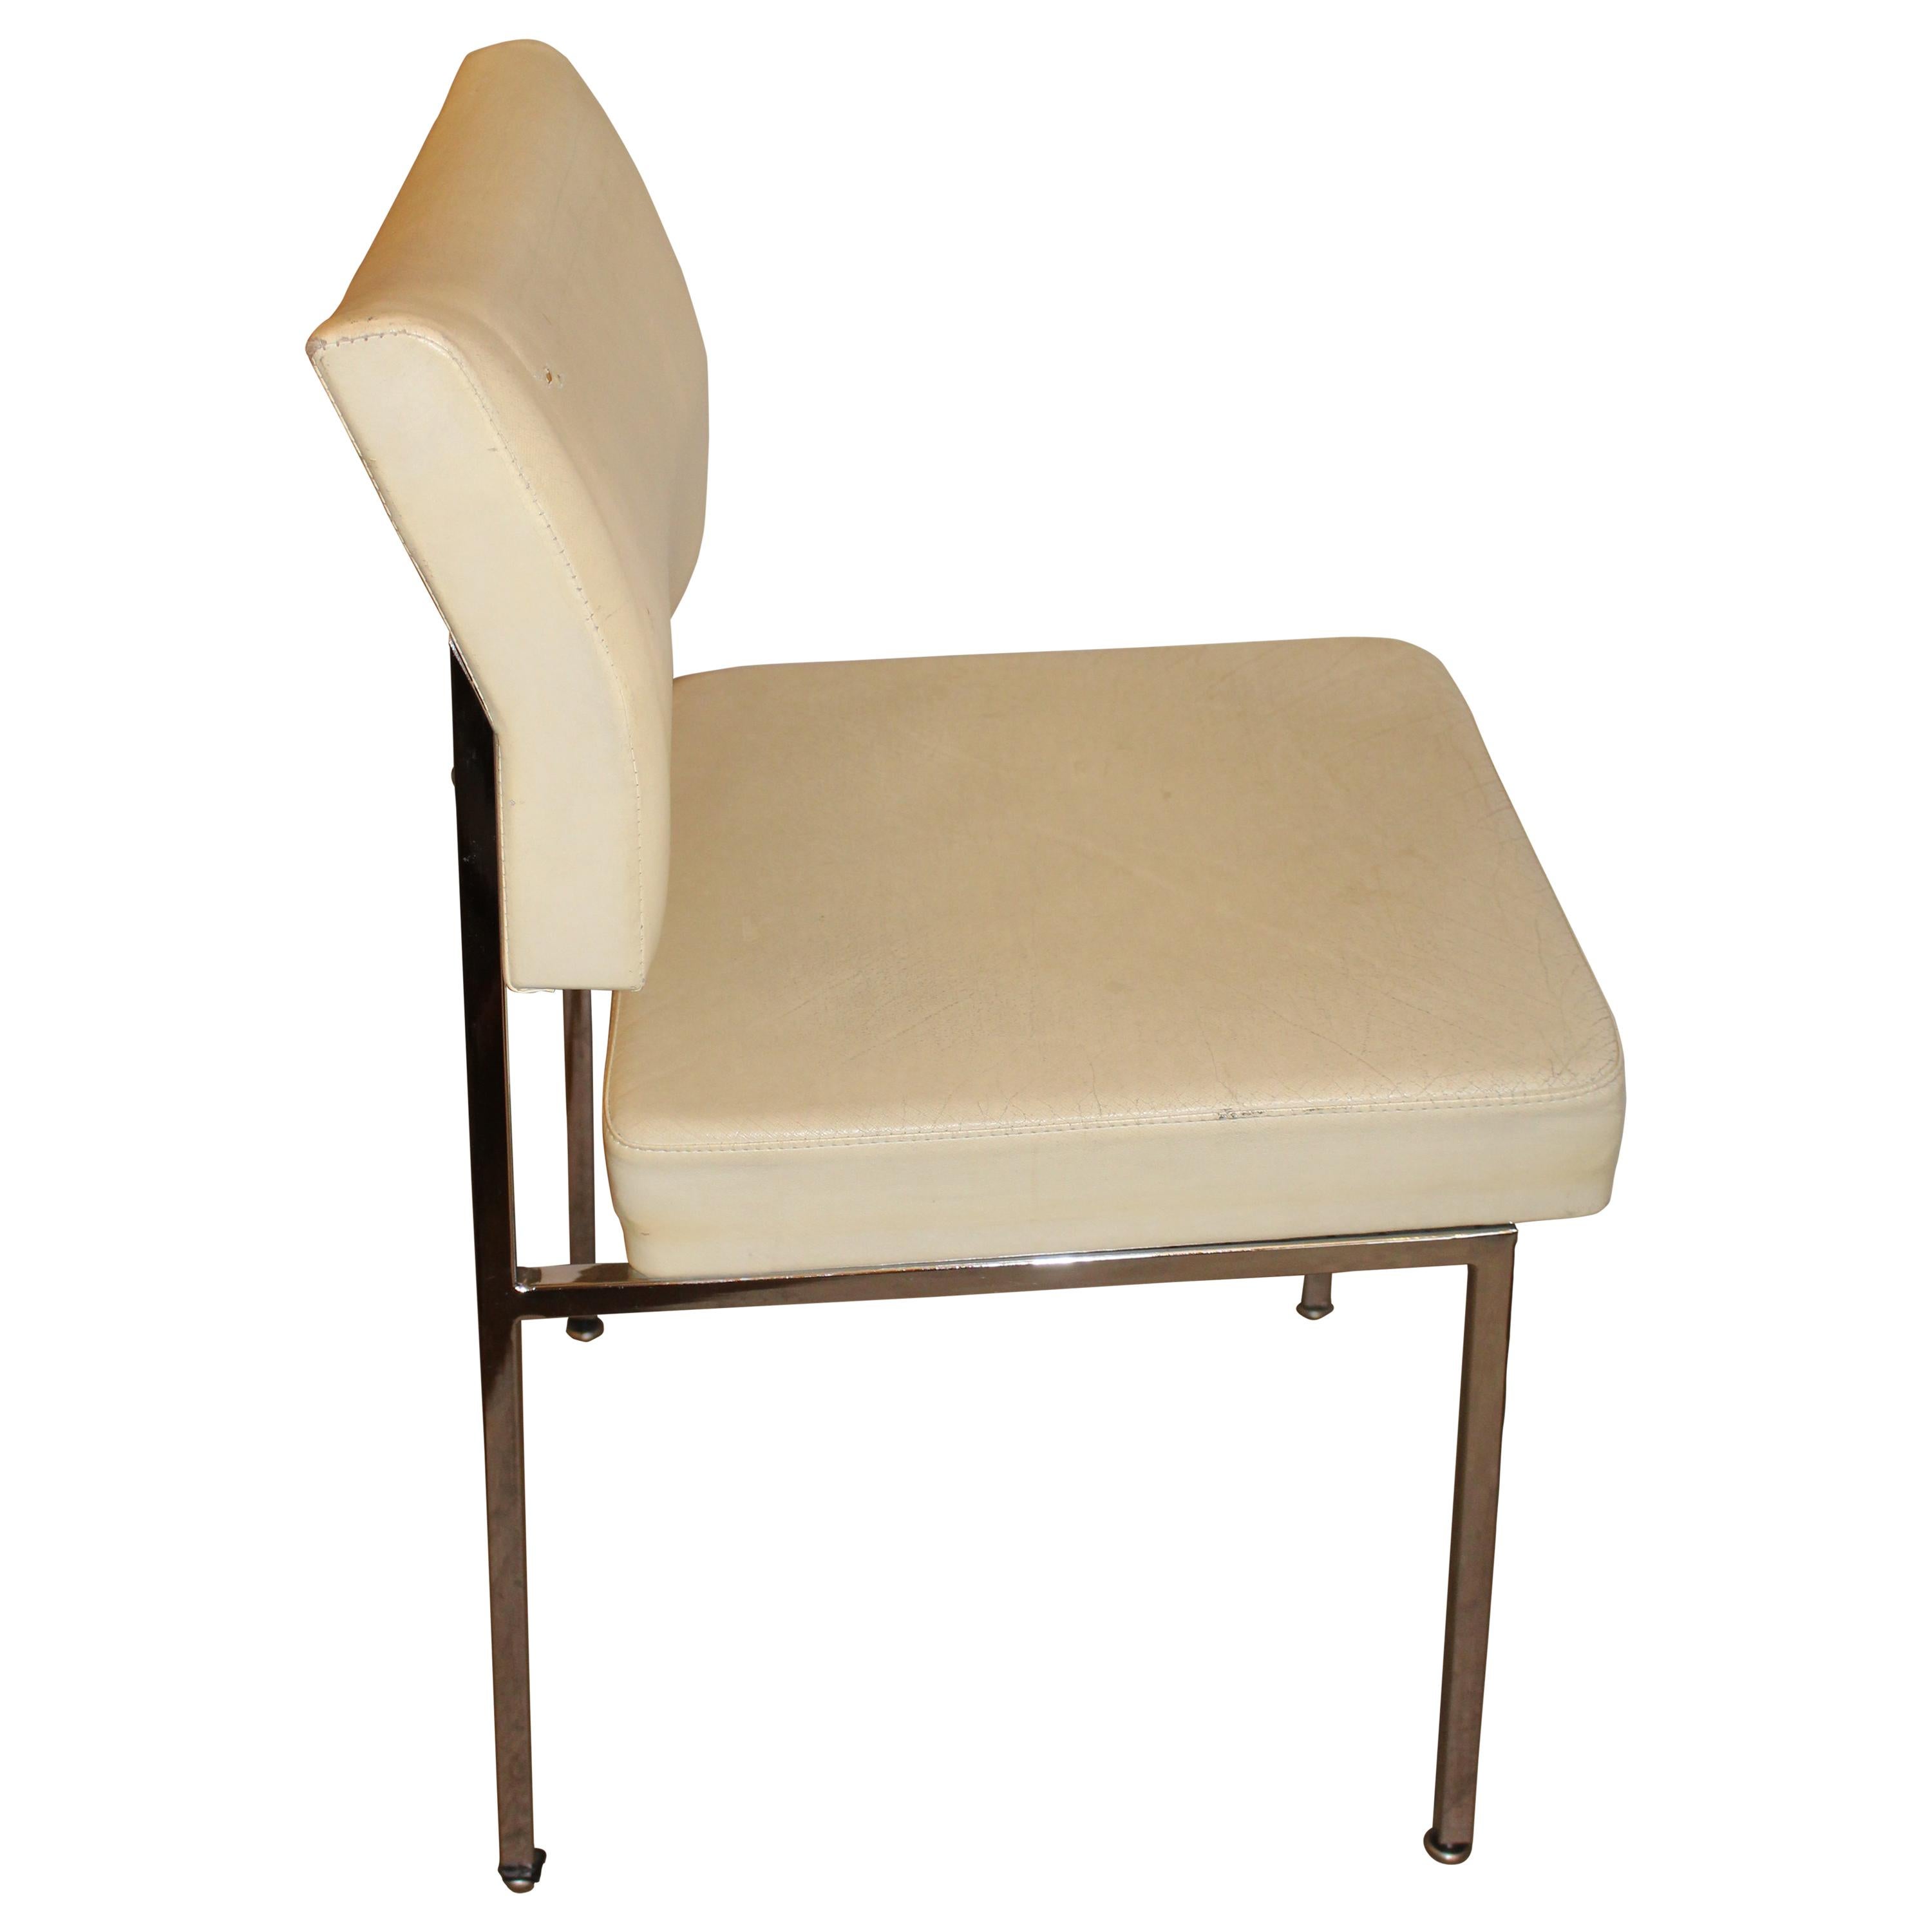 1970's Mid Century Chrome Steel Cream Skai Faux Leather Dining Desk Design Chair For Sale